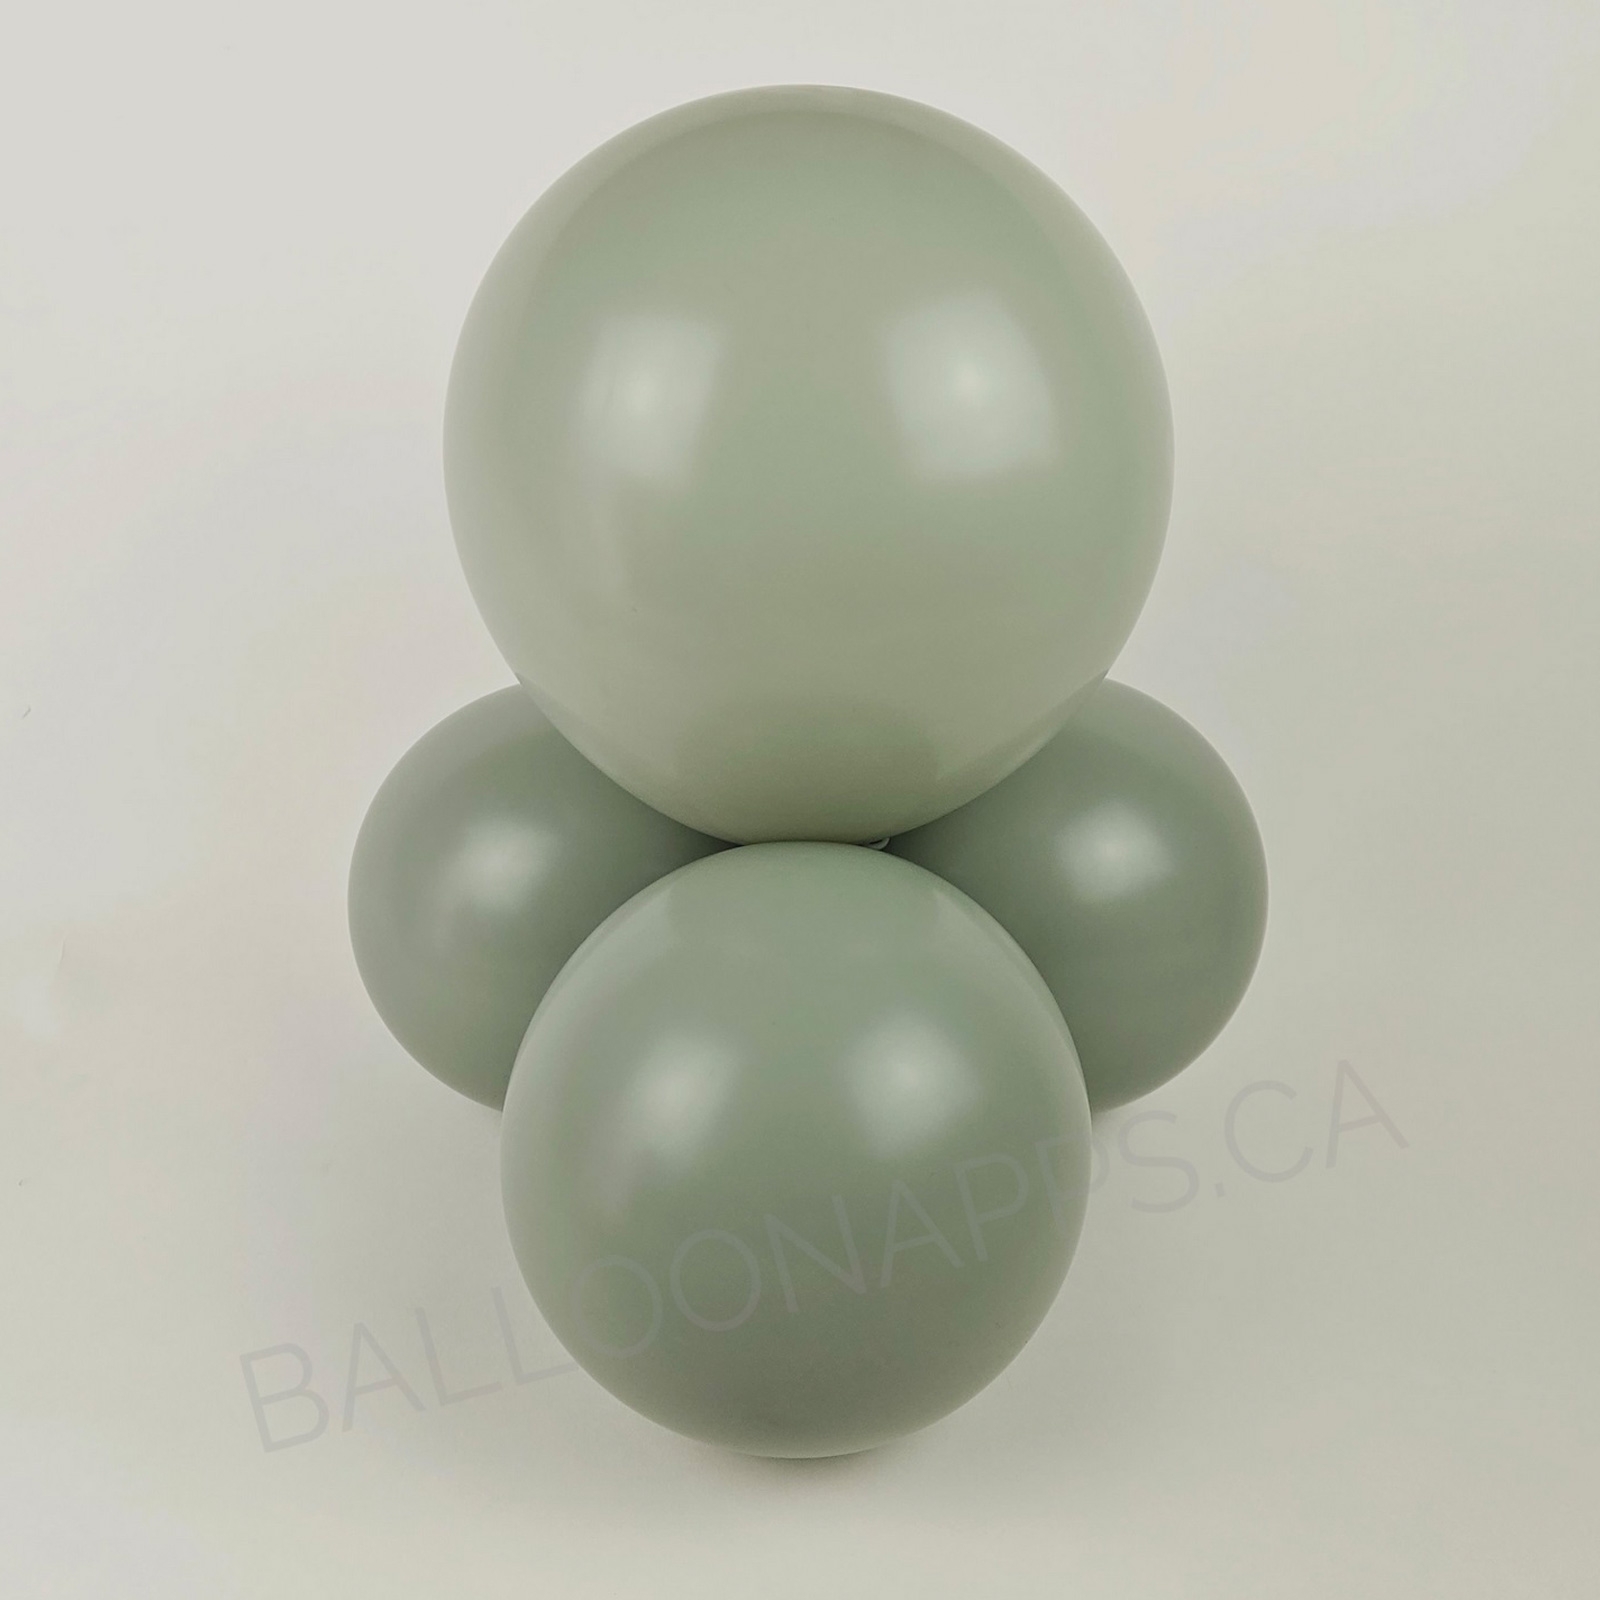 balloon texture Sempertex SEM (50) 260 Pastel Dusk Laurel Green Latex balloons